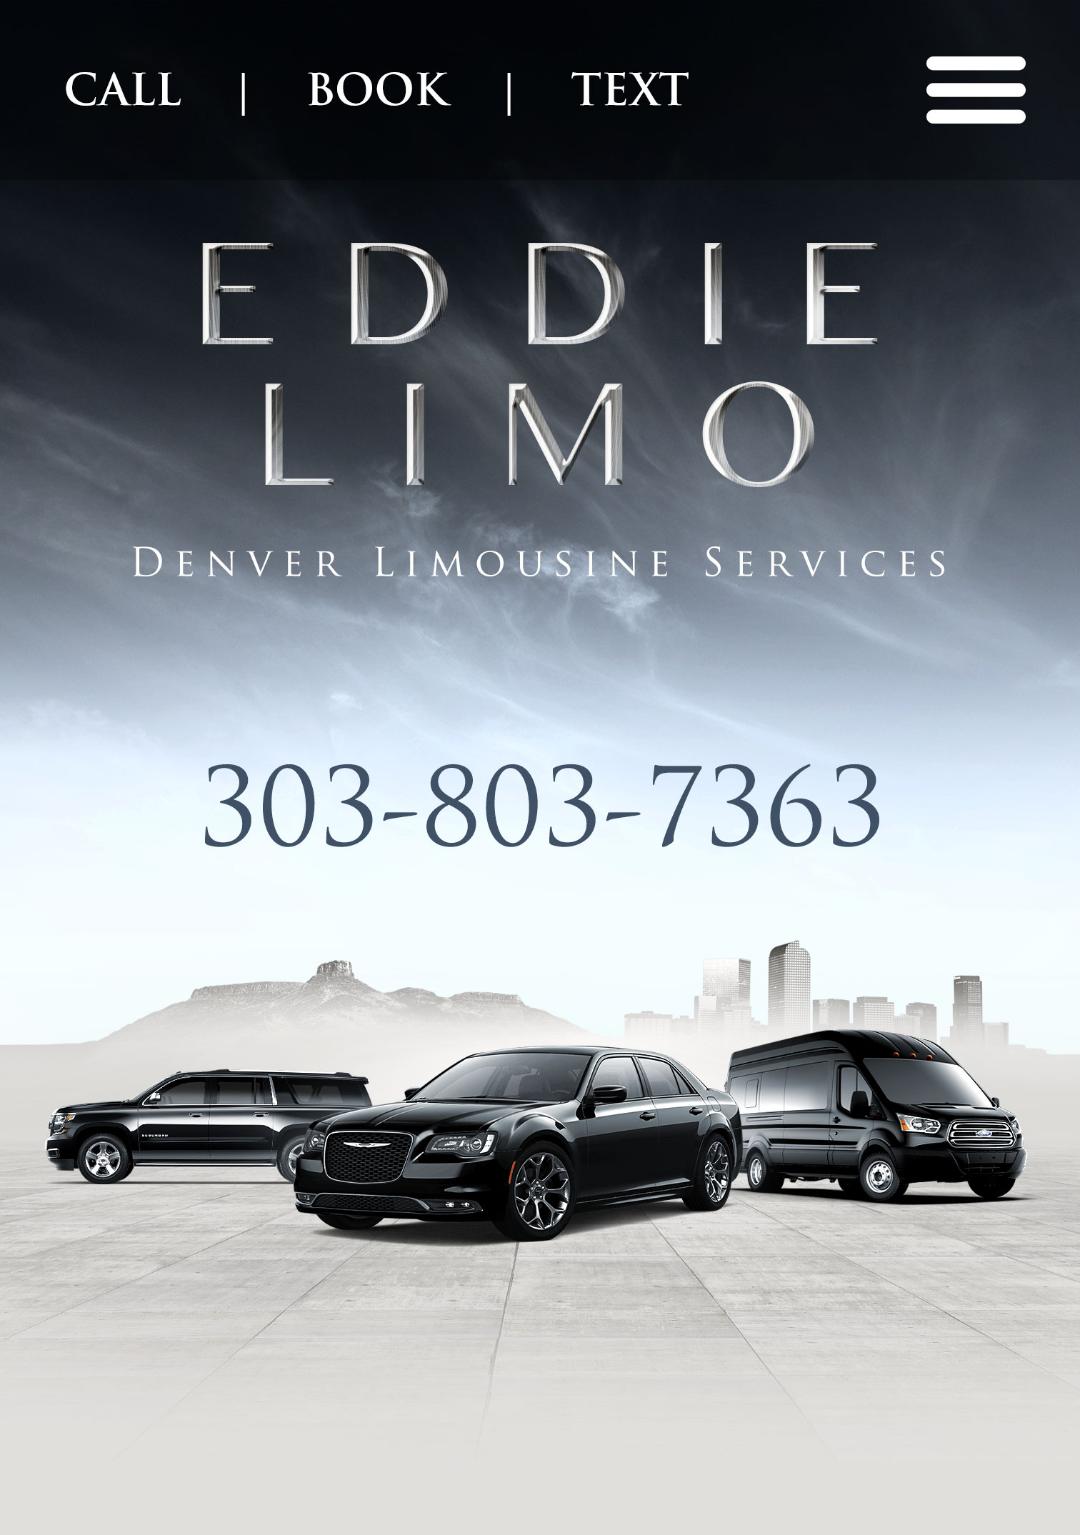 Denver’s Eddie Limo Celebrates 17th Anniversary of its Limousine Services 